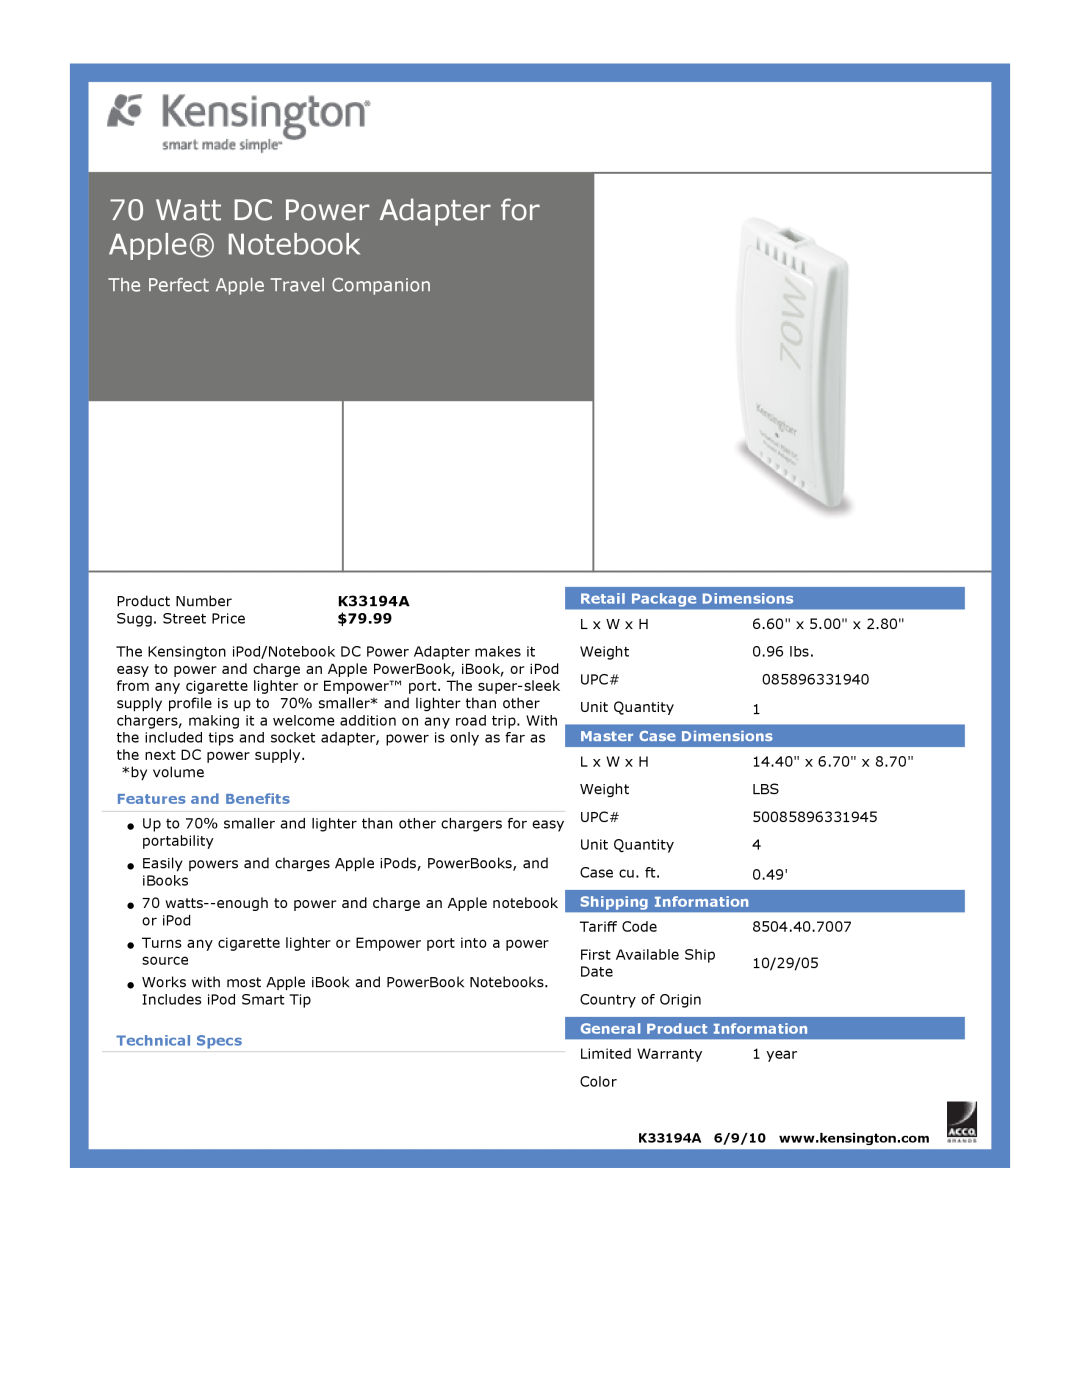 Kensington EU64325 Watt DC Power Adapter for Apple Notebook, The Perfect Apple Travel Companion, $79.99, Technical Specs 